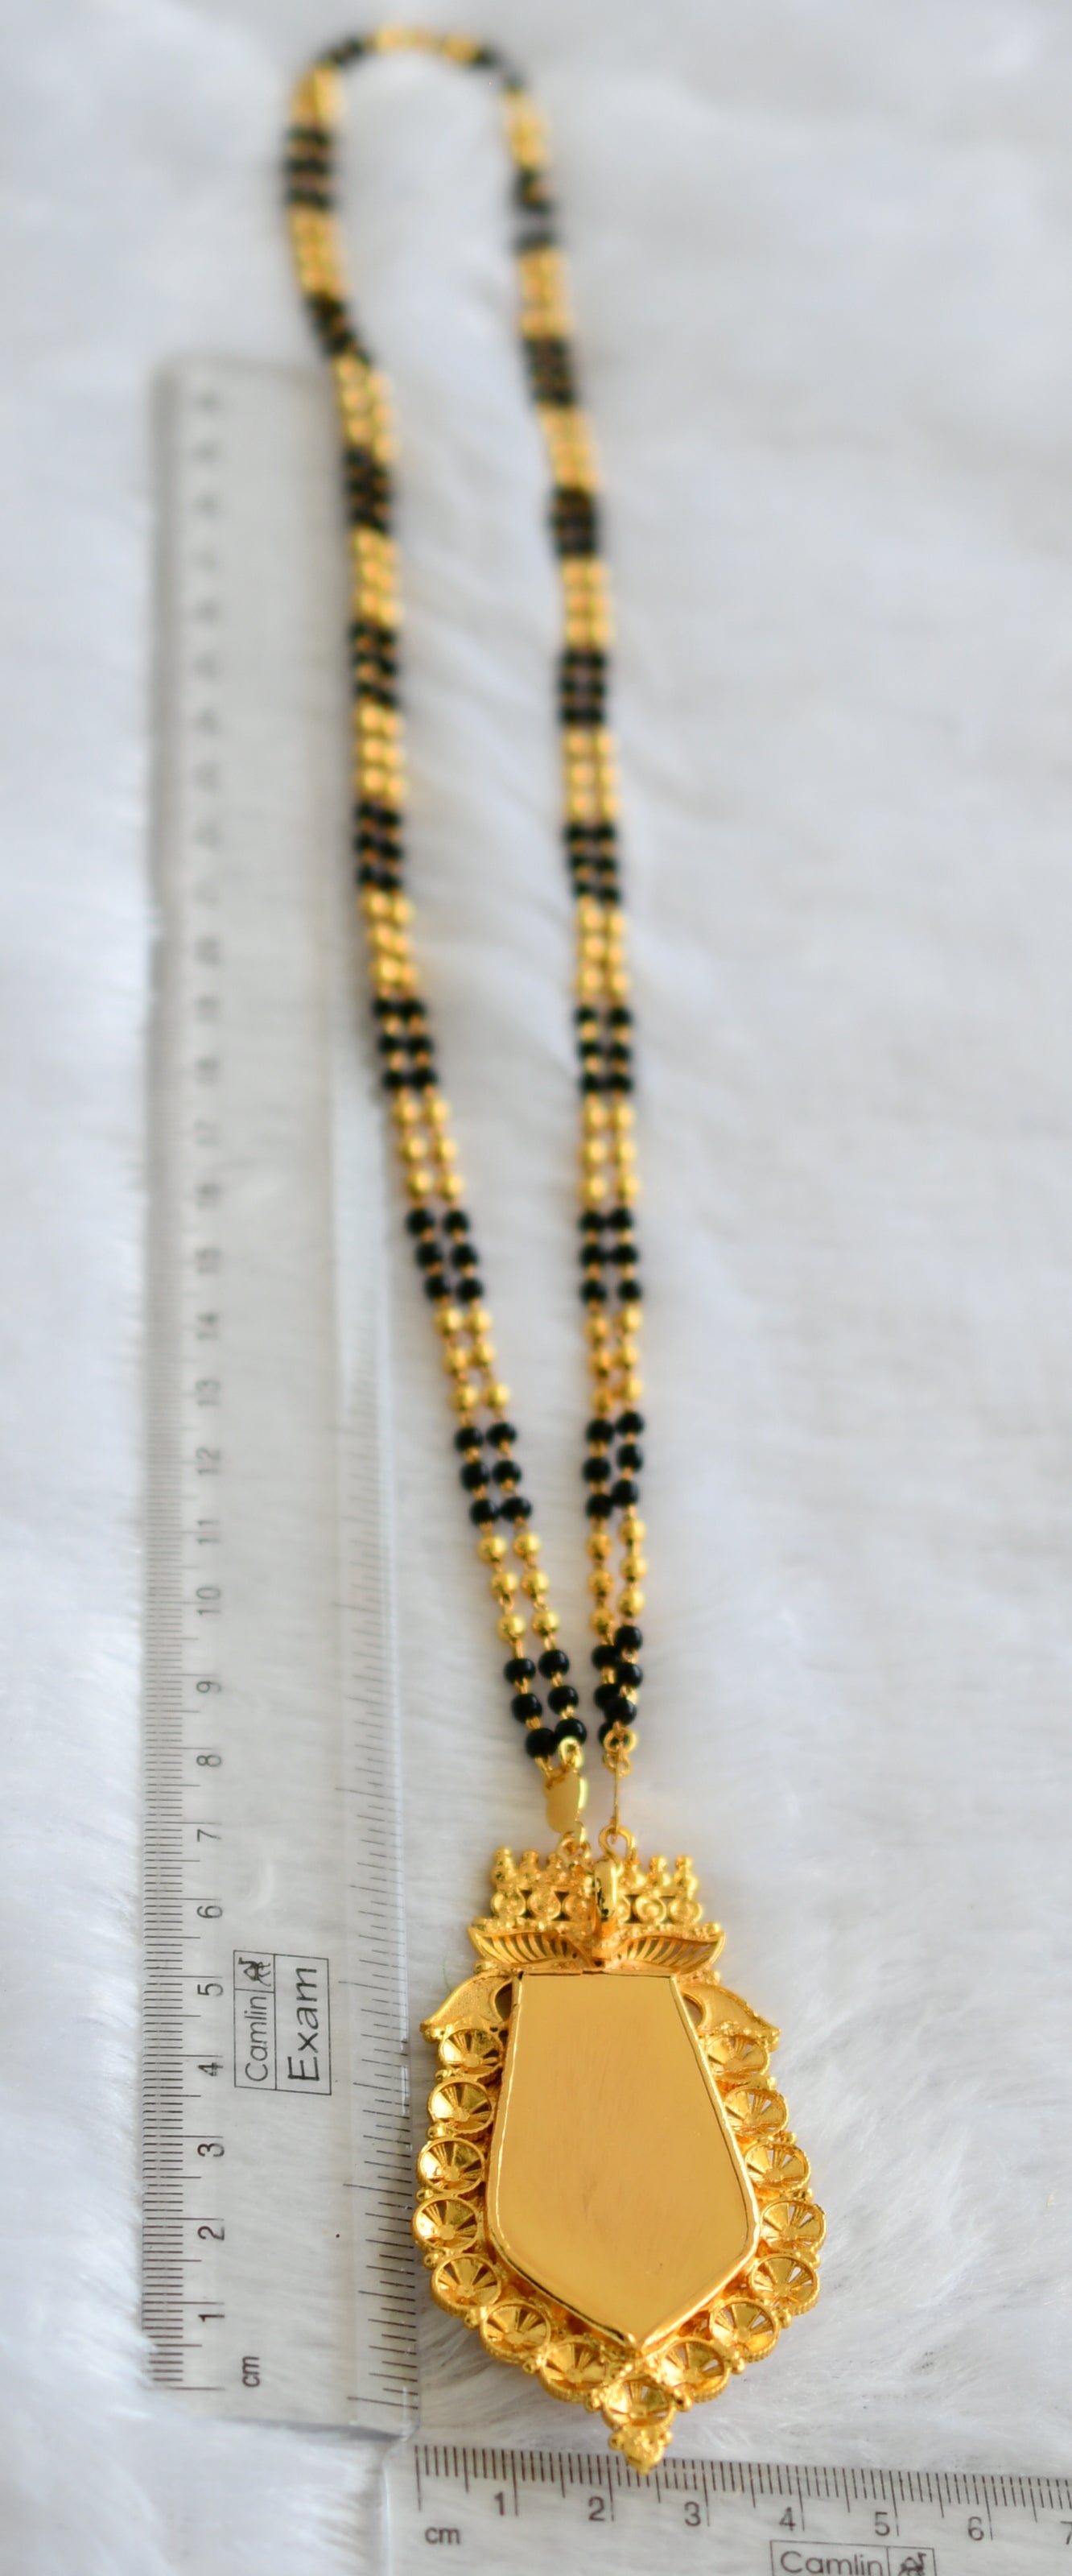 Gold tone kerala style karimani chain with white-red krishna nagapadam pendant with chain dj-46542